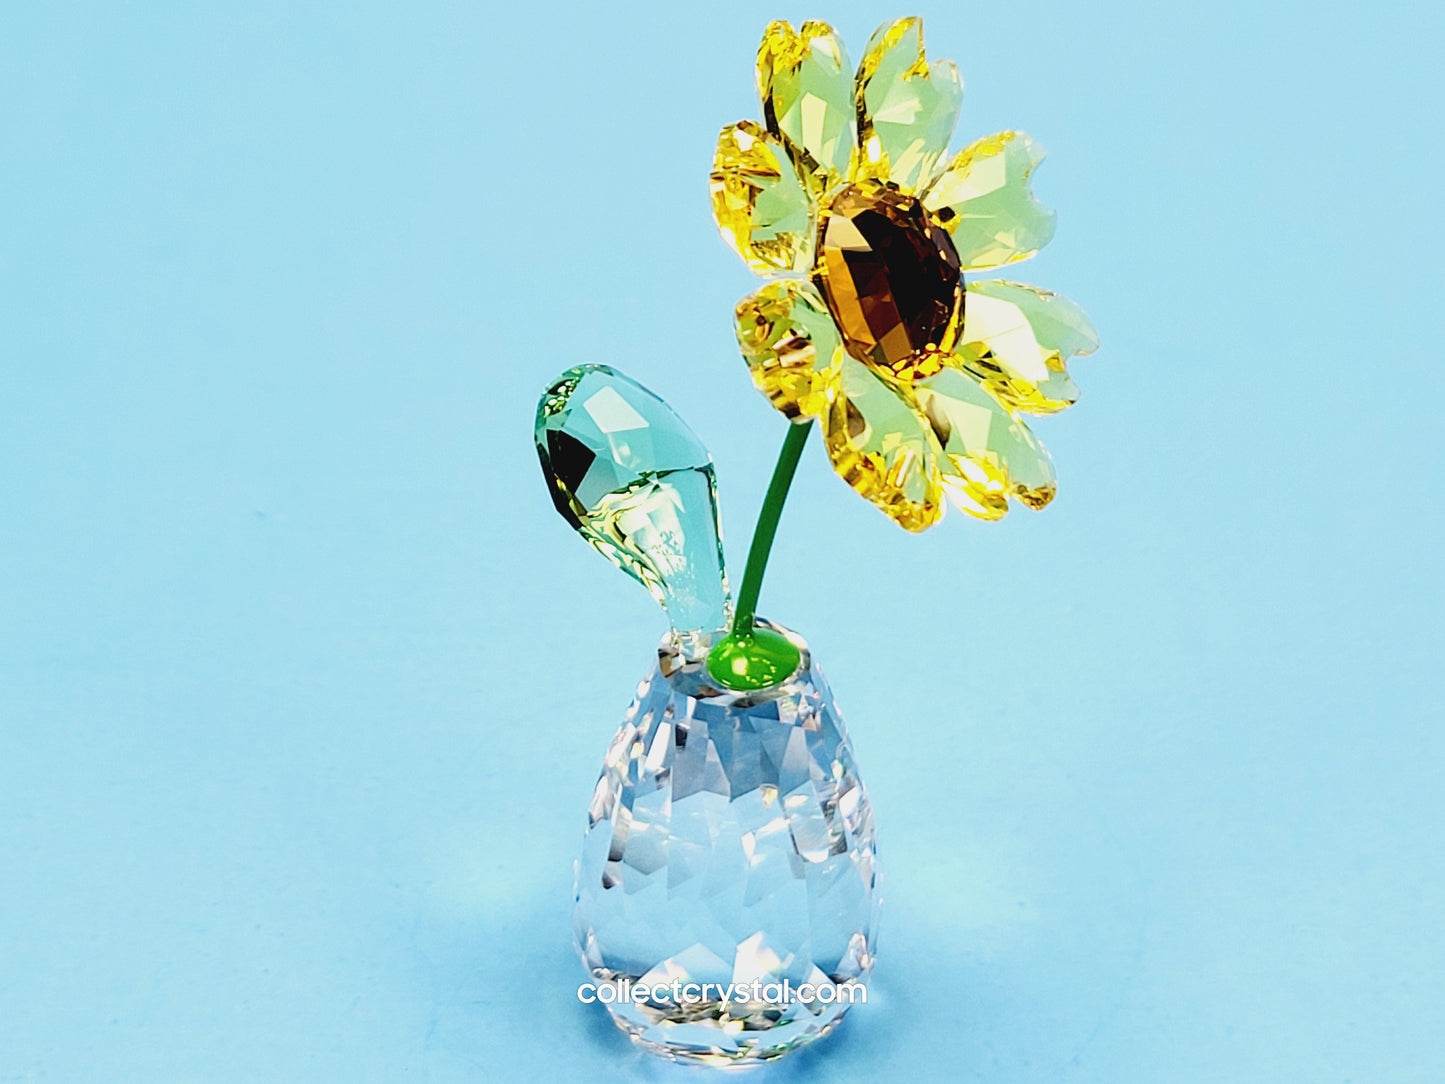 Flower Dreams - Sunflower 5254311